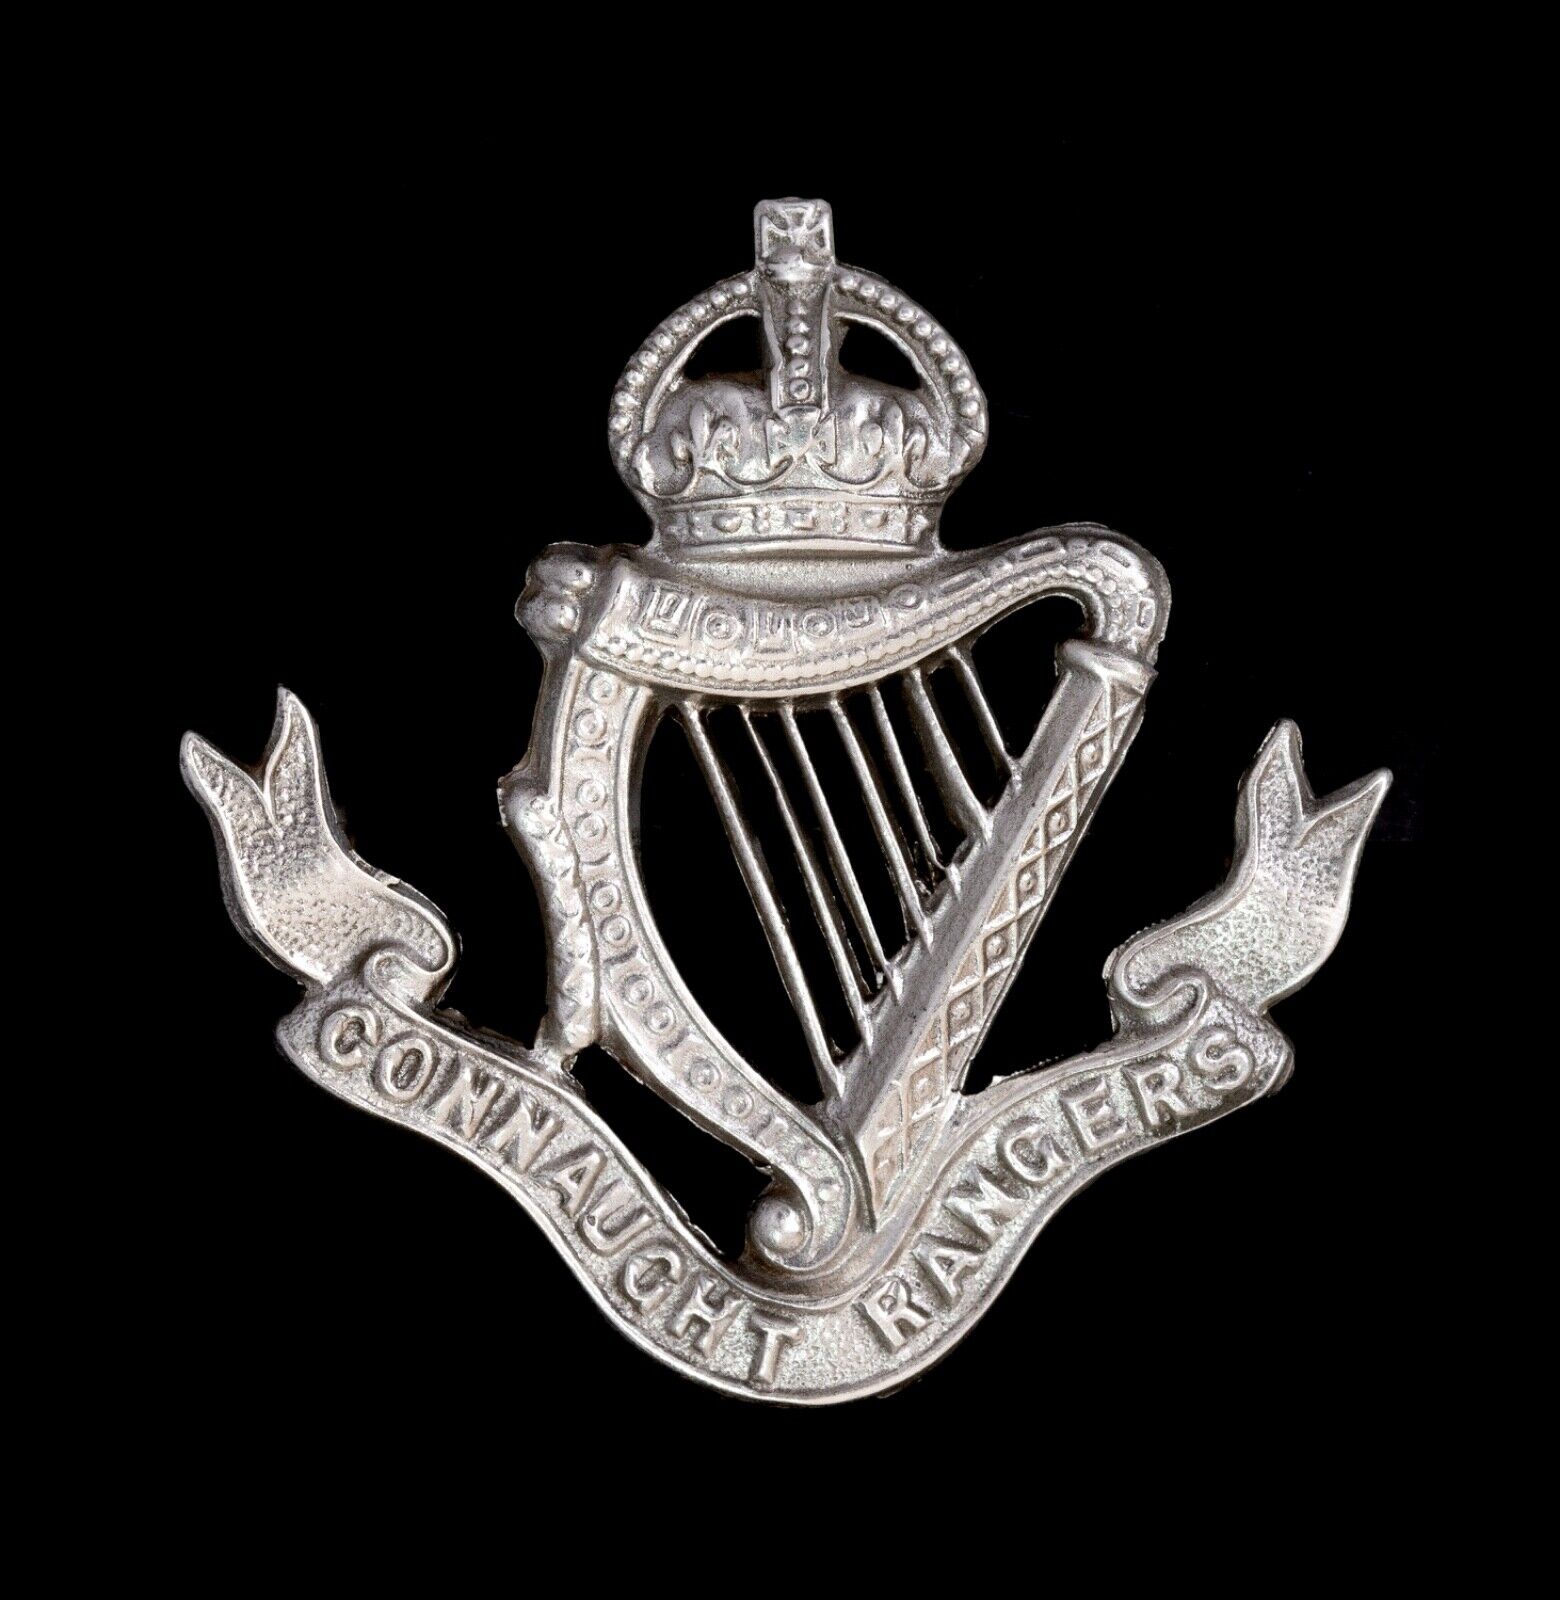 Connaught Rangers Cap Badge Hallmarked Silver